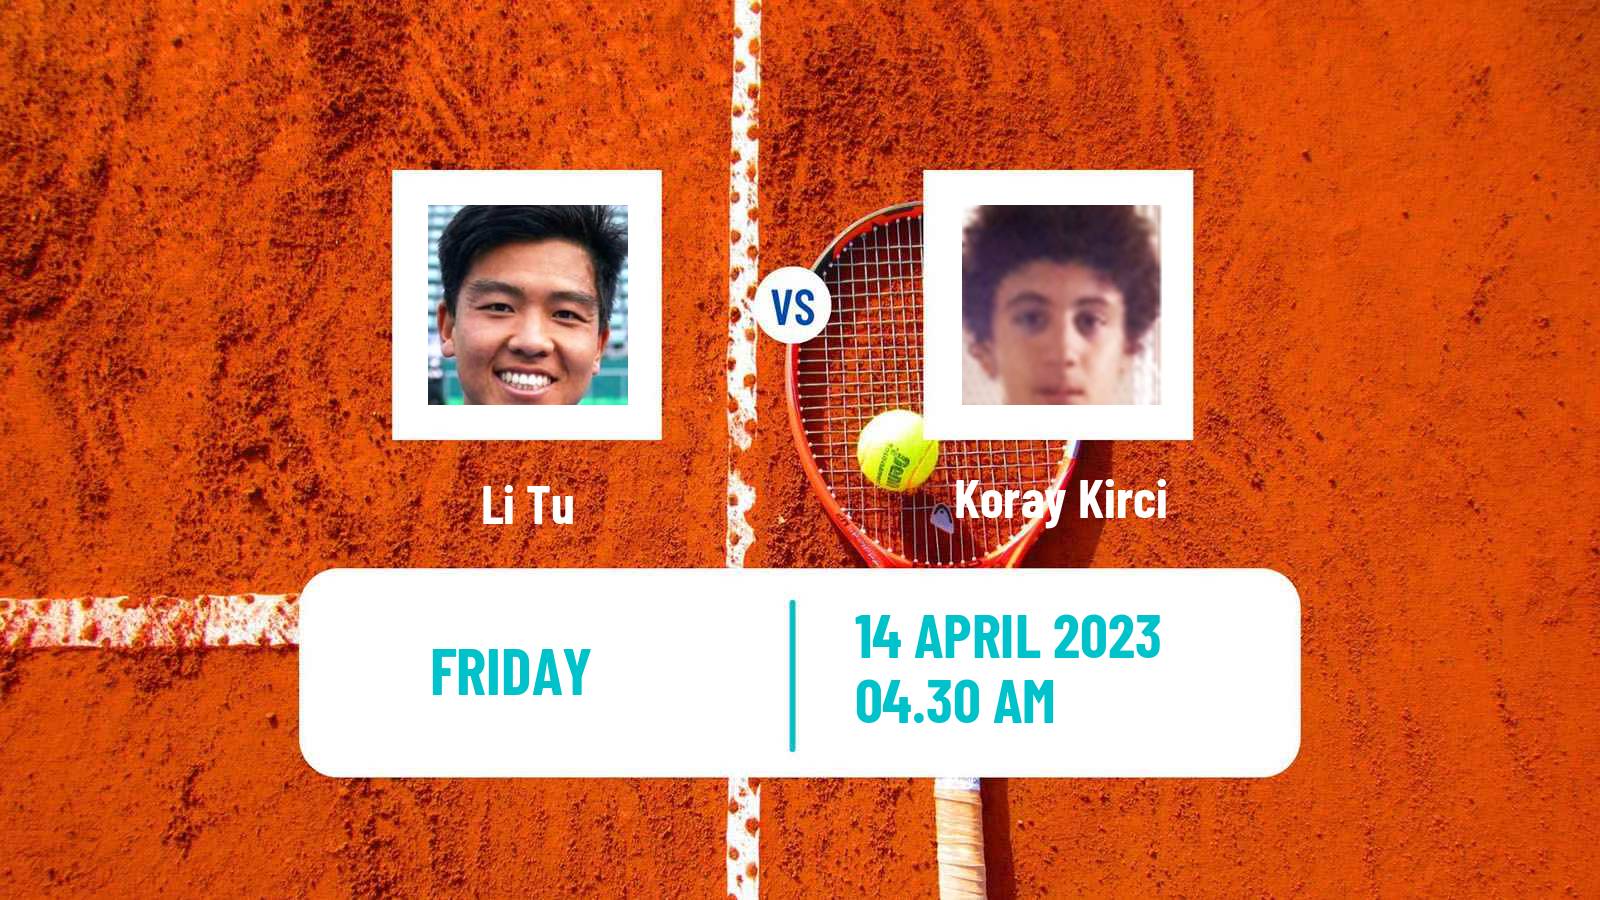 Tennis ITF Tournaments Li Tu - Koray Kirci